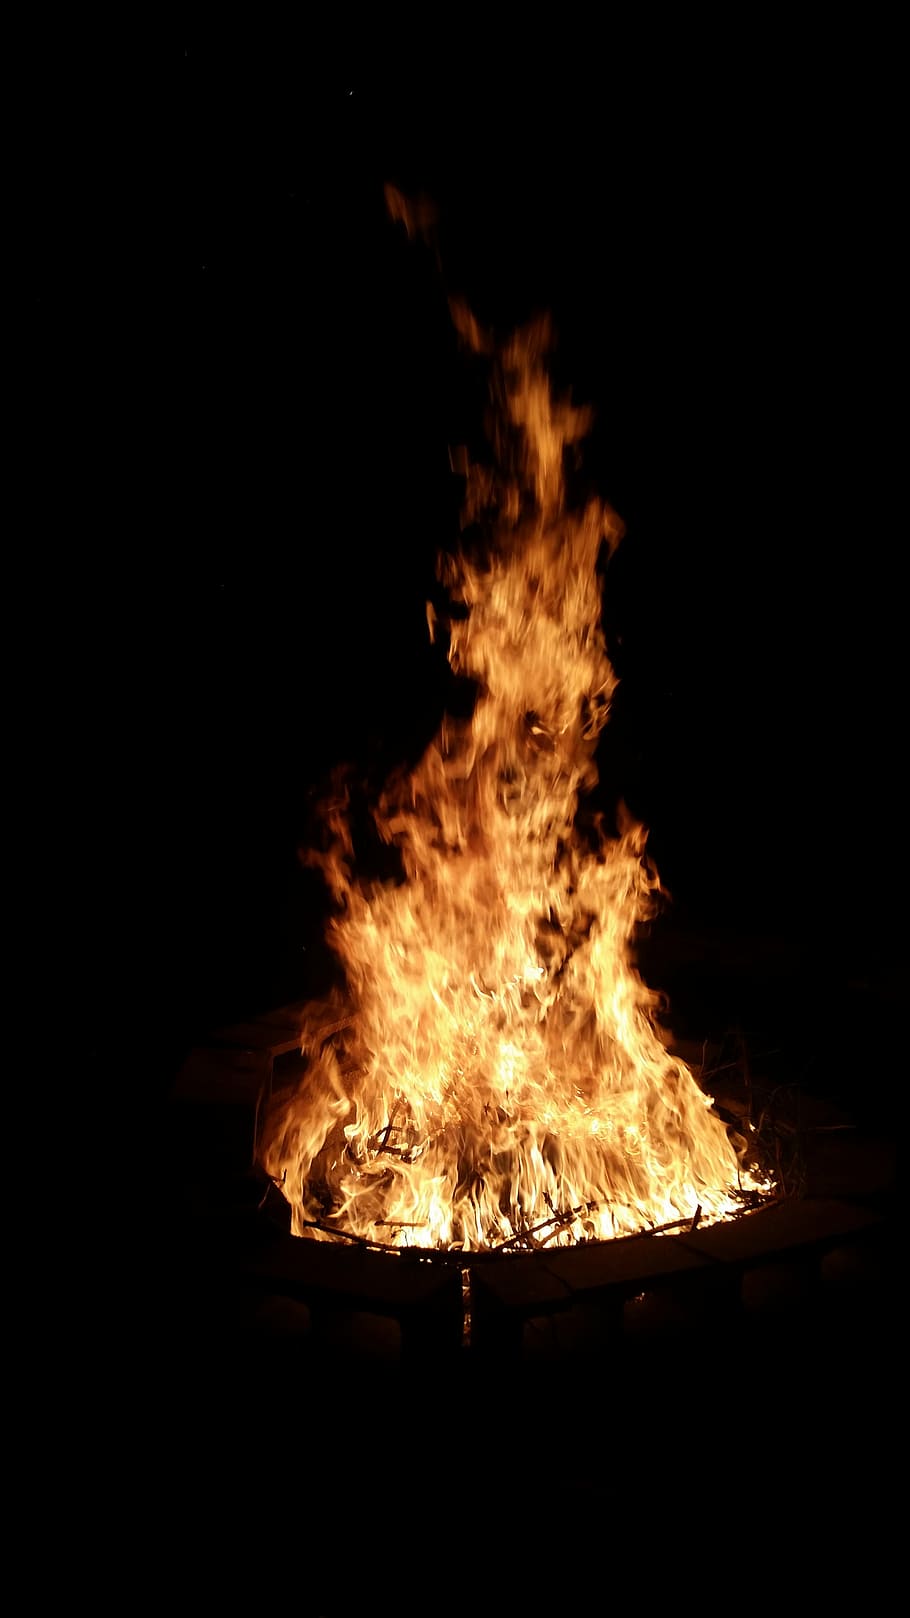 fuego, fogata, llamas, hoguera, chimenea, fuego - Fenómeno natural, calor - Temperatura, llama, ardor, rojo